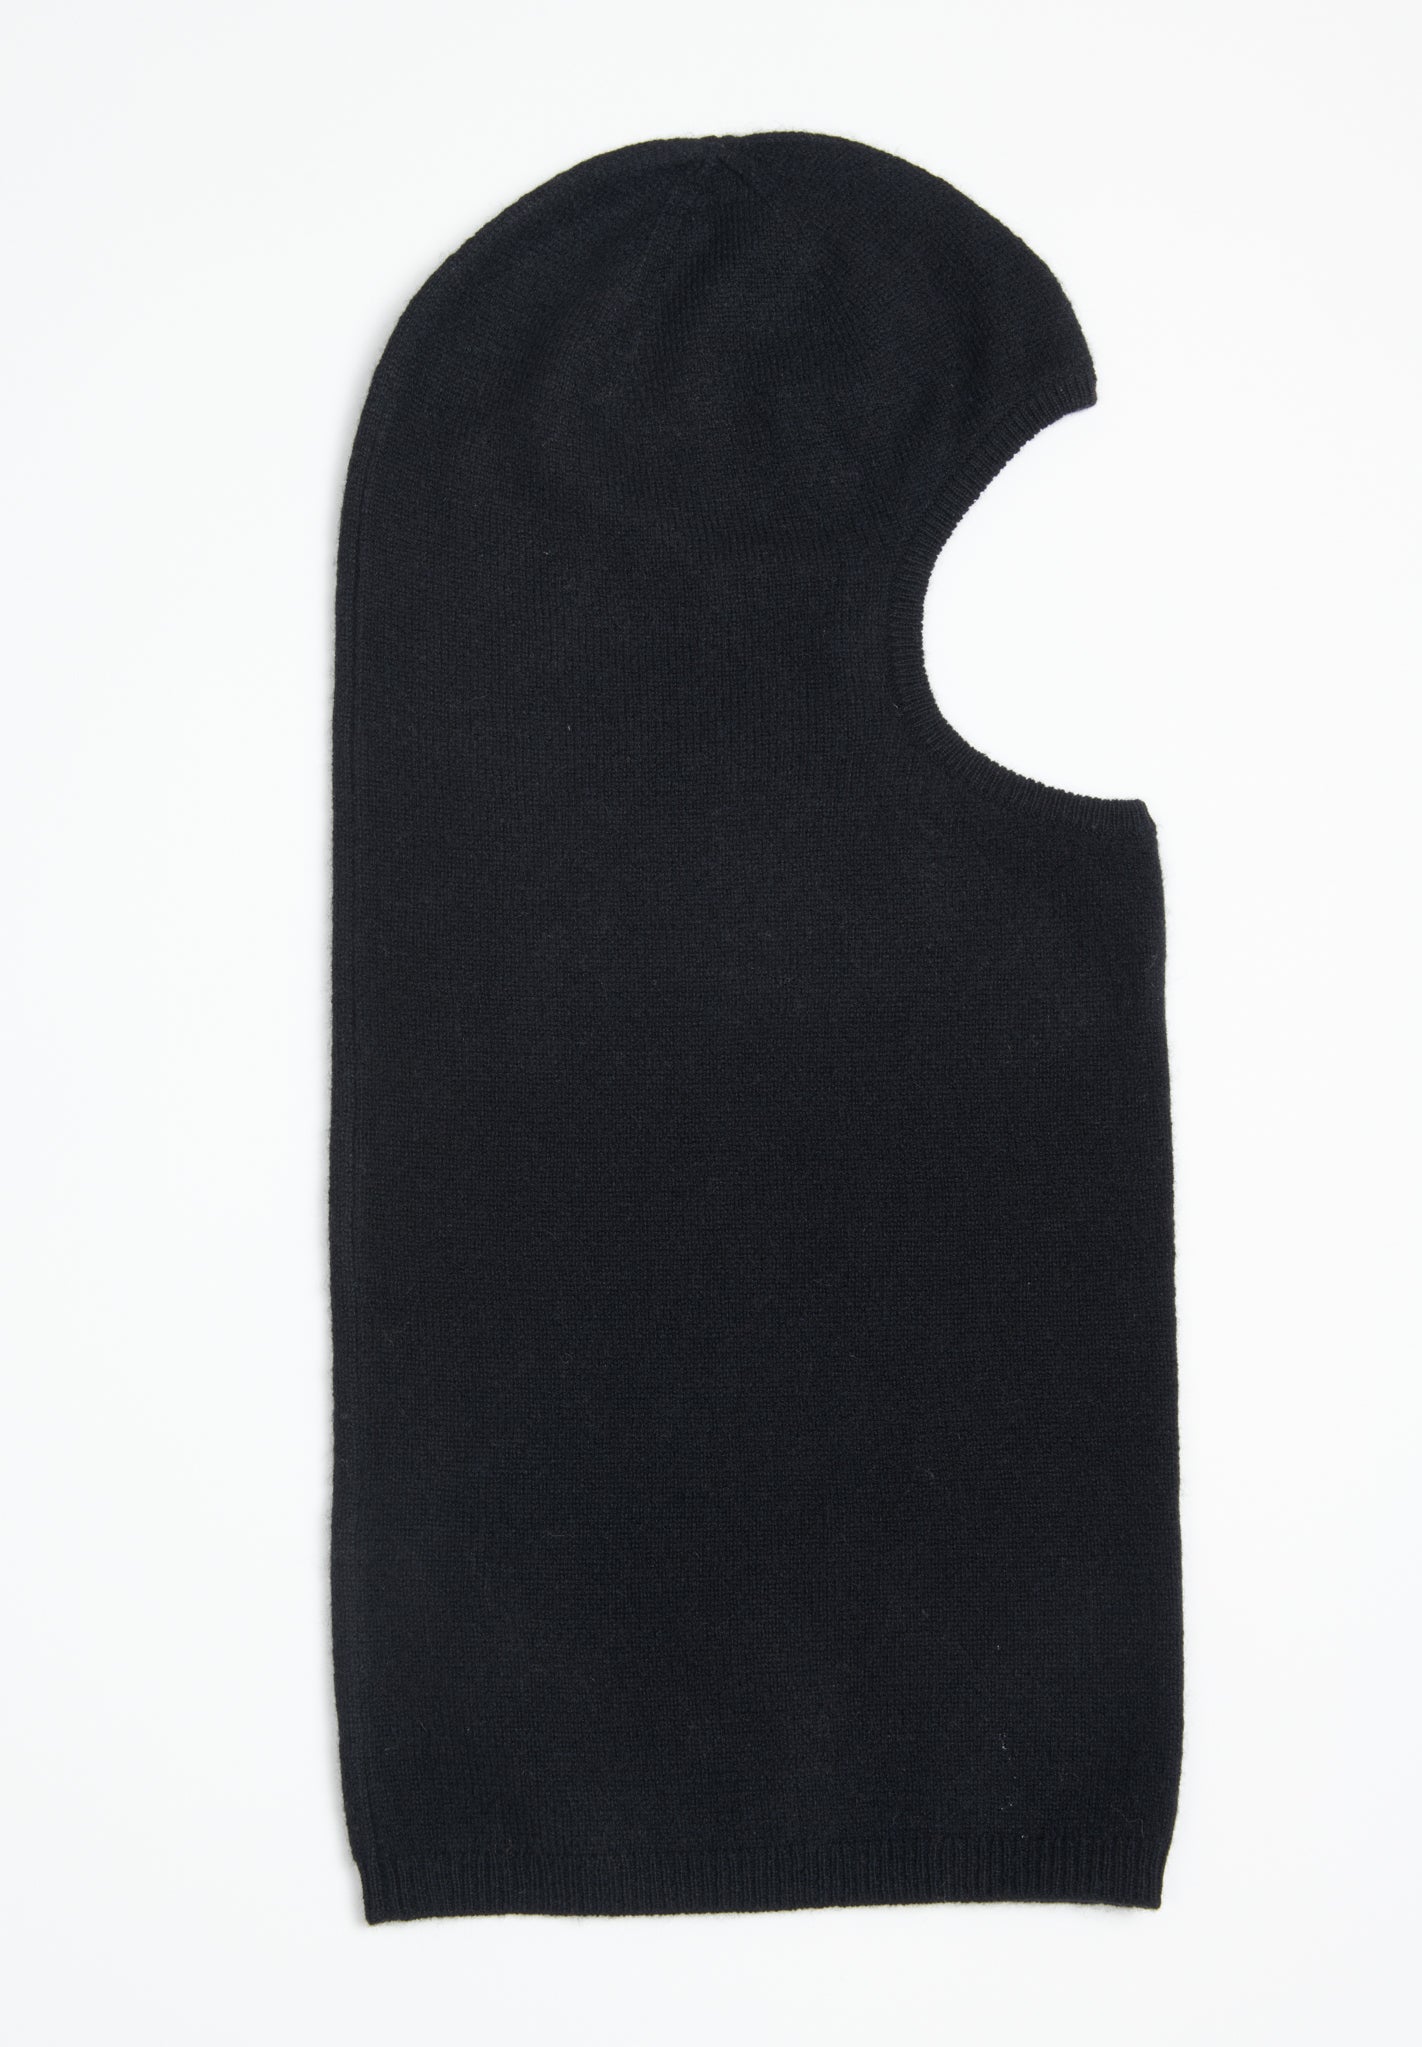 UNI 9 Black cashmere balaclava